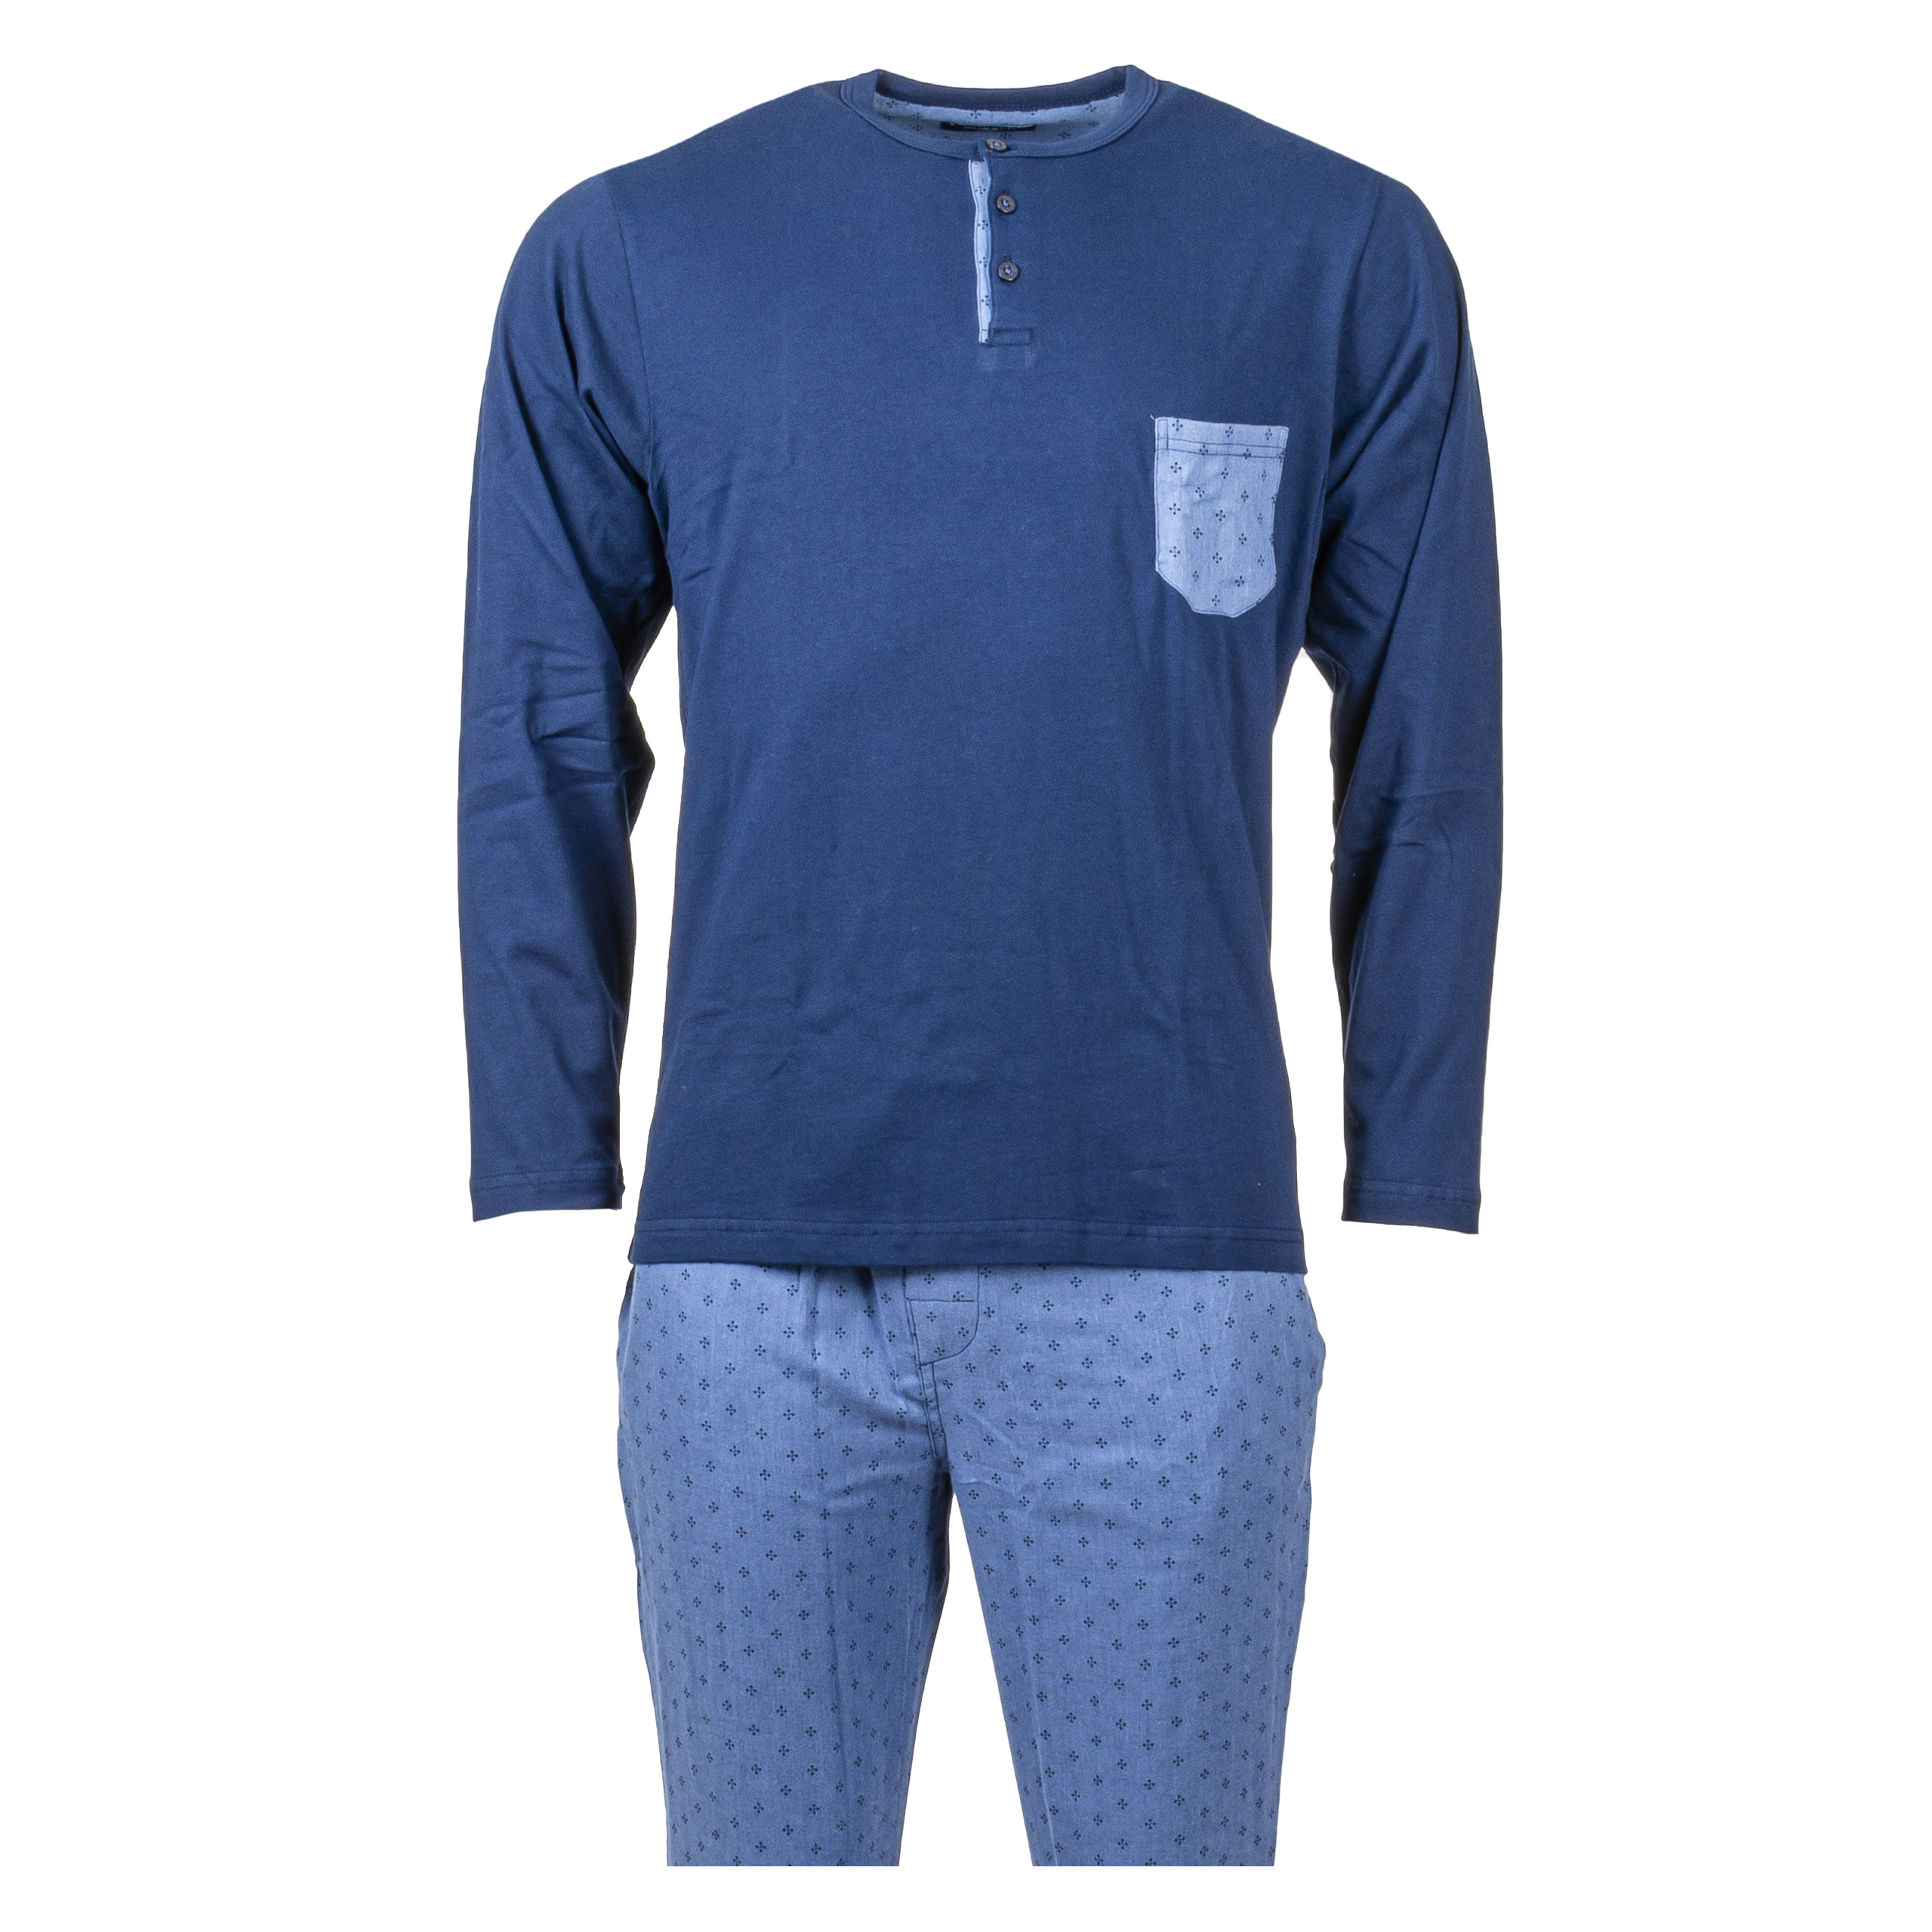 Pyjama long Guasch en coton bleu marine et bleu ciel à motifs